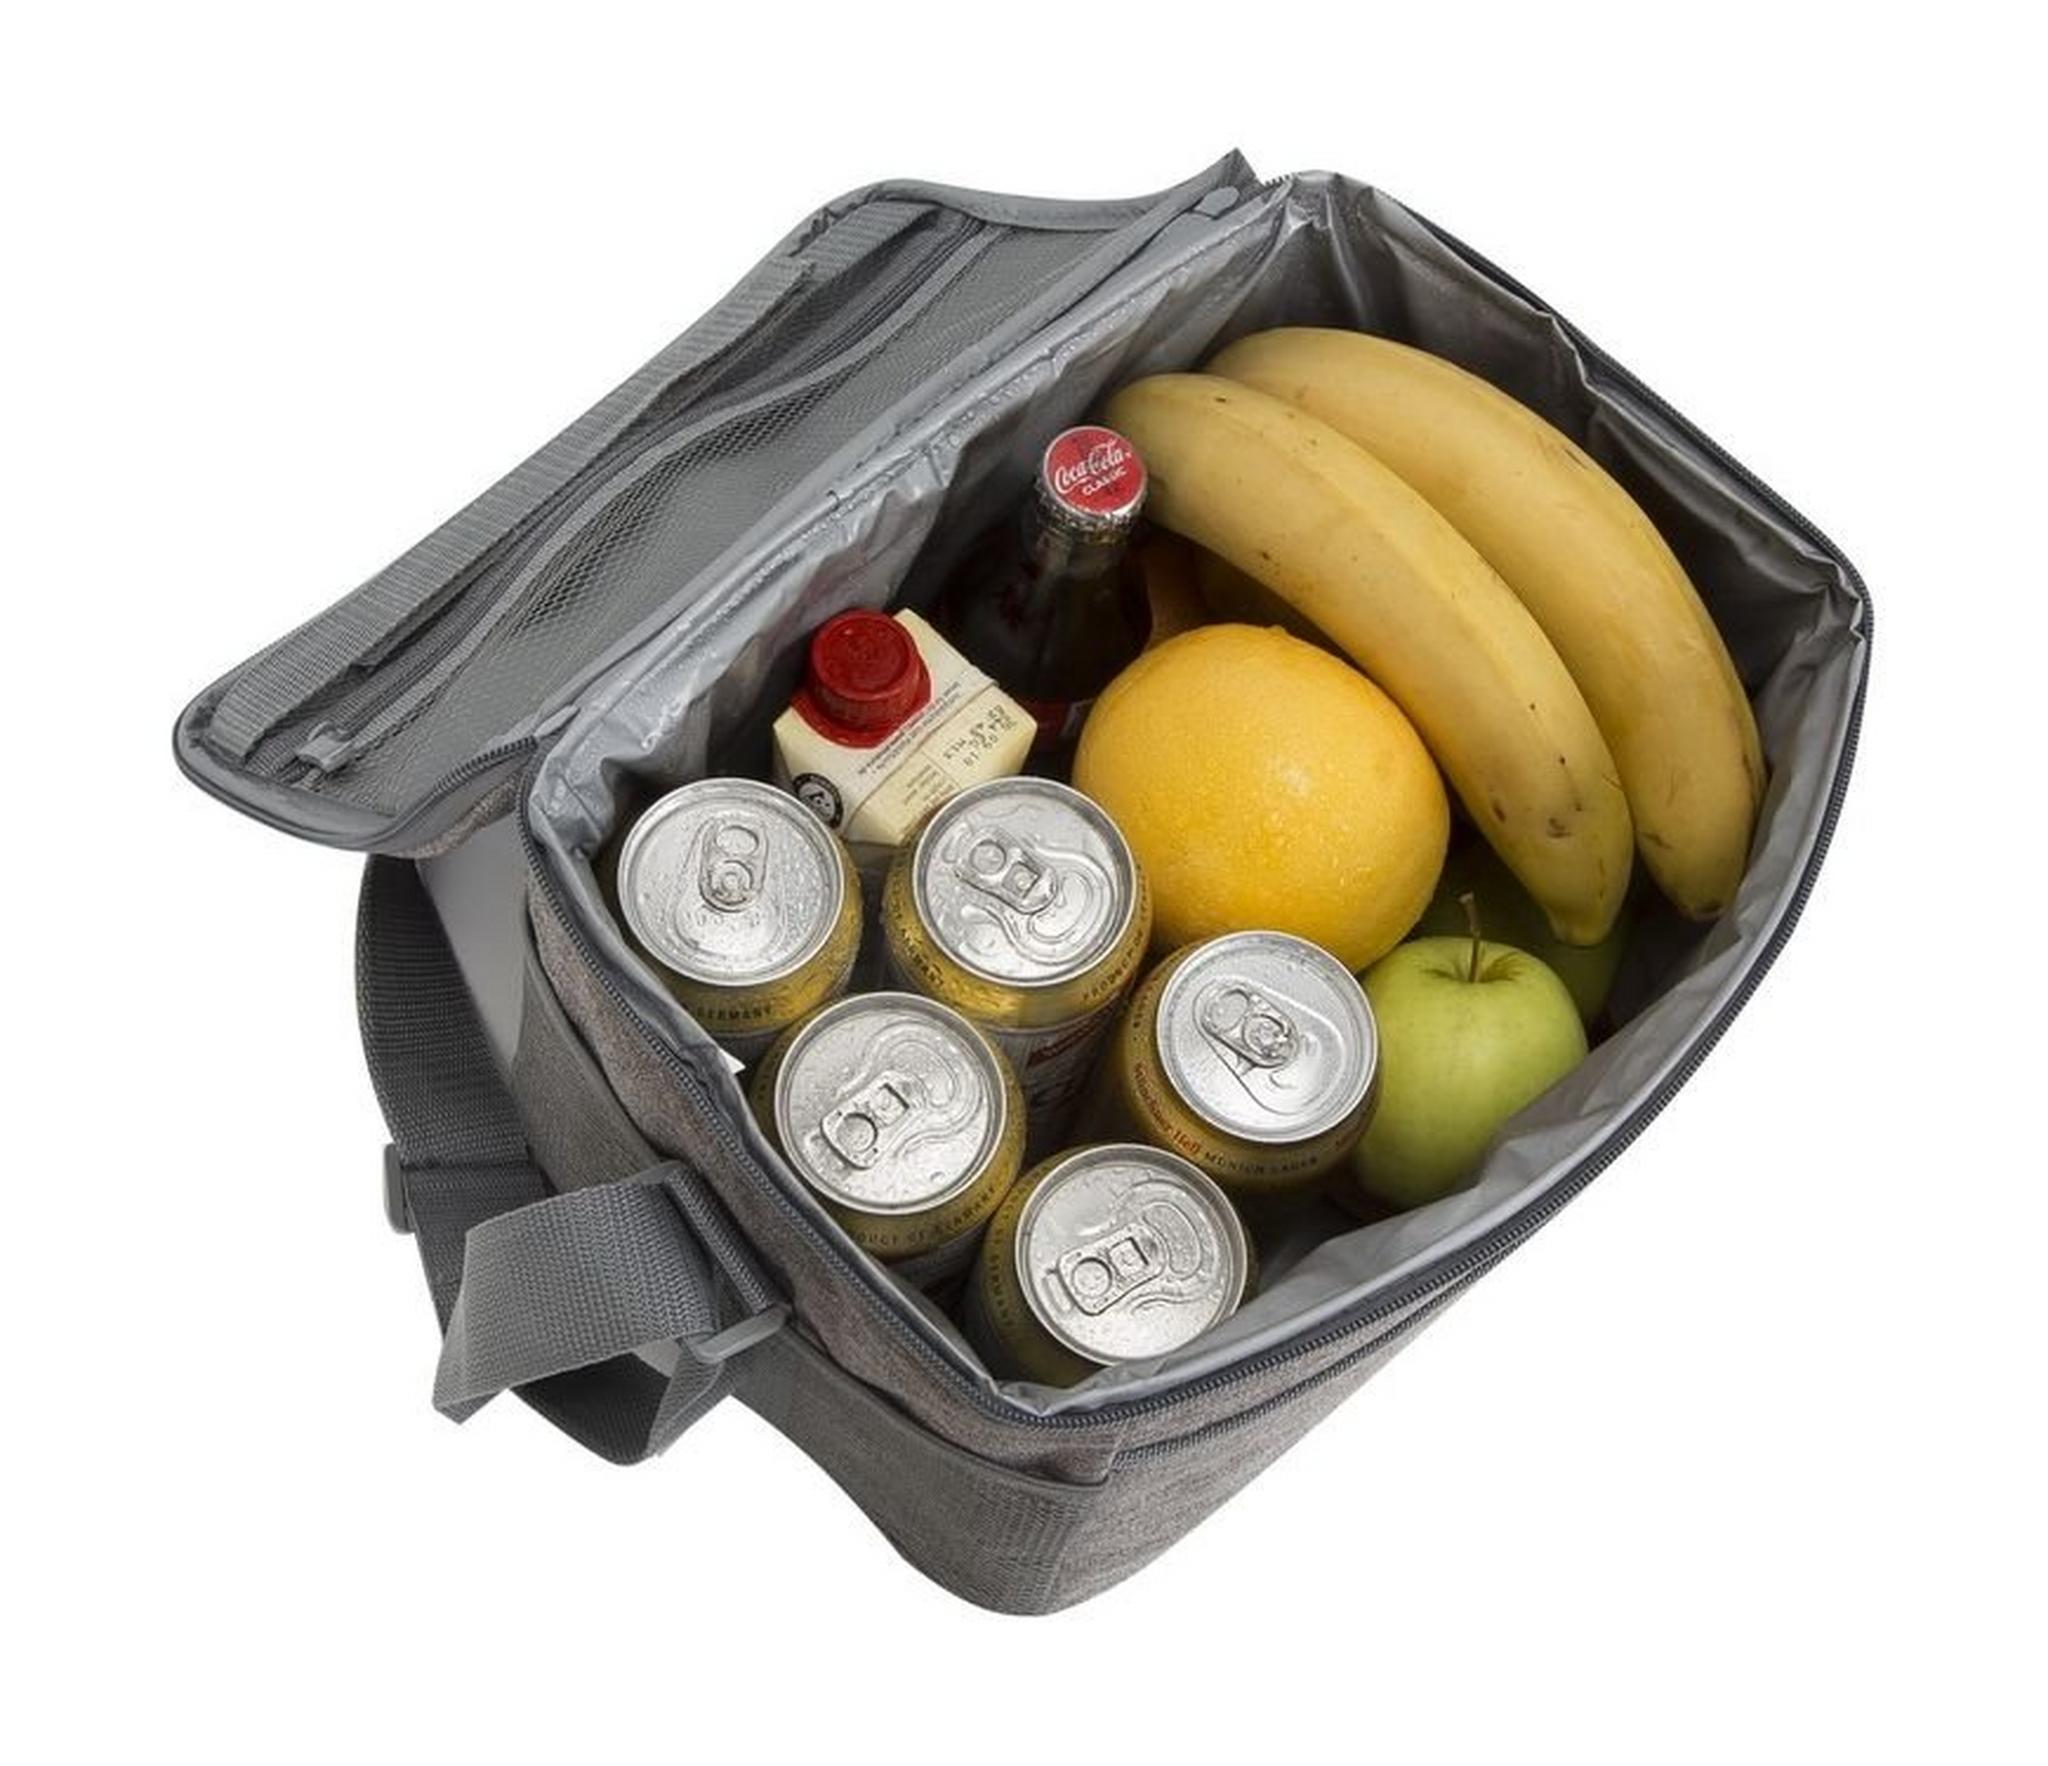 RivaCase 11L Cooler Bag (5712) - Grey